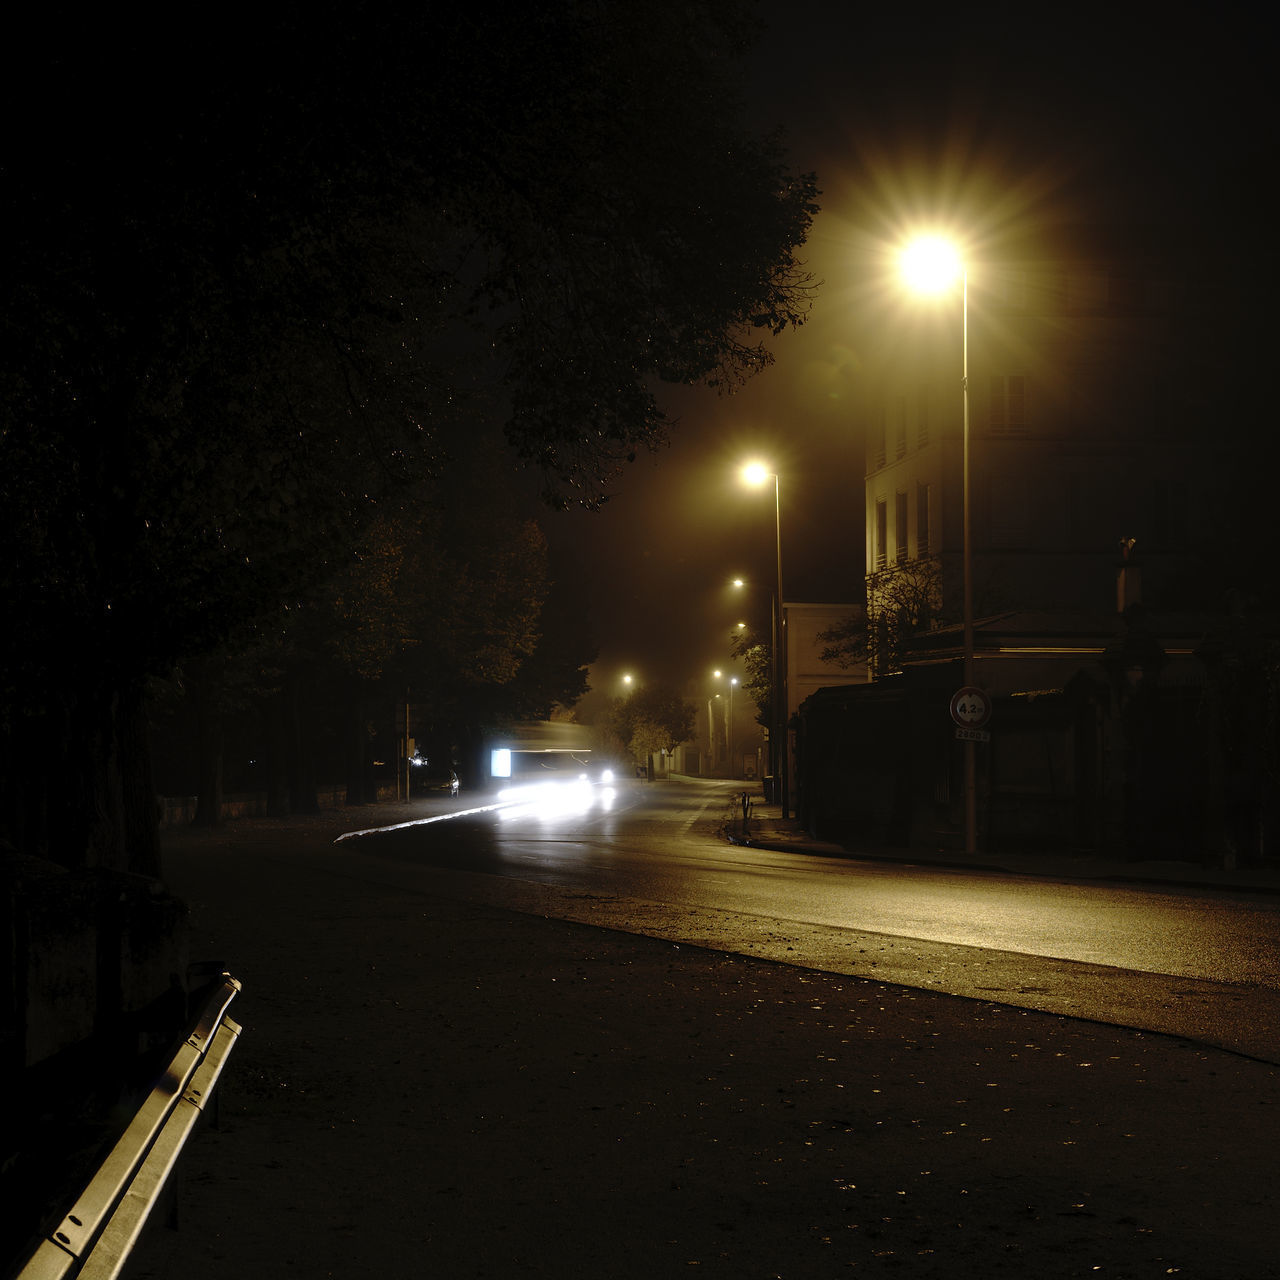 ILLUMINATED STREET LIGHTS AT NIGHT